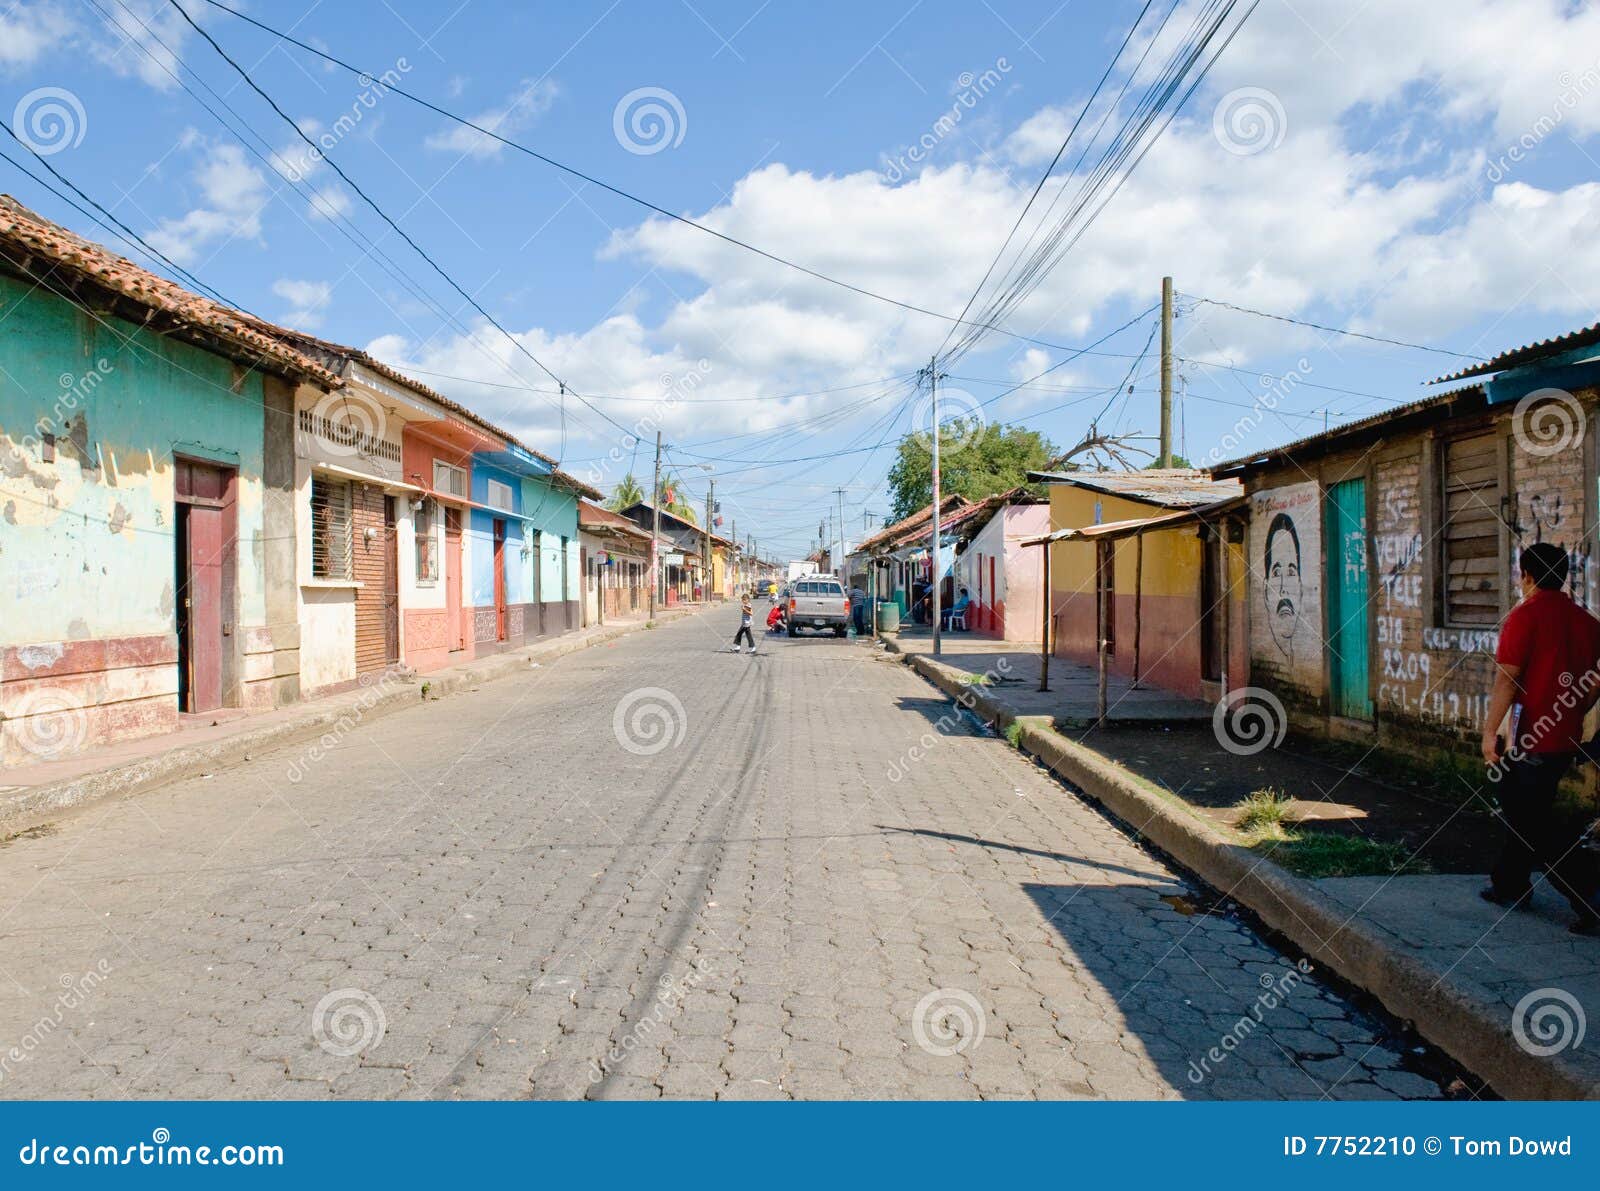 leon street scene nicaragua